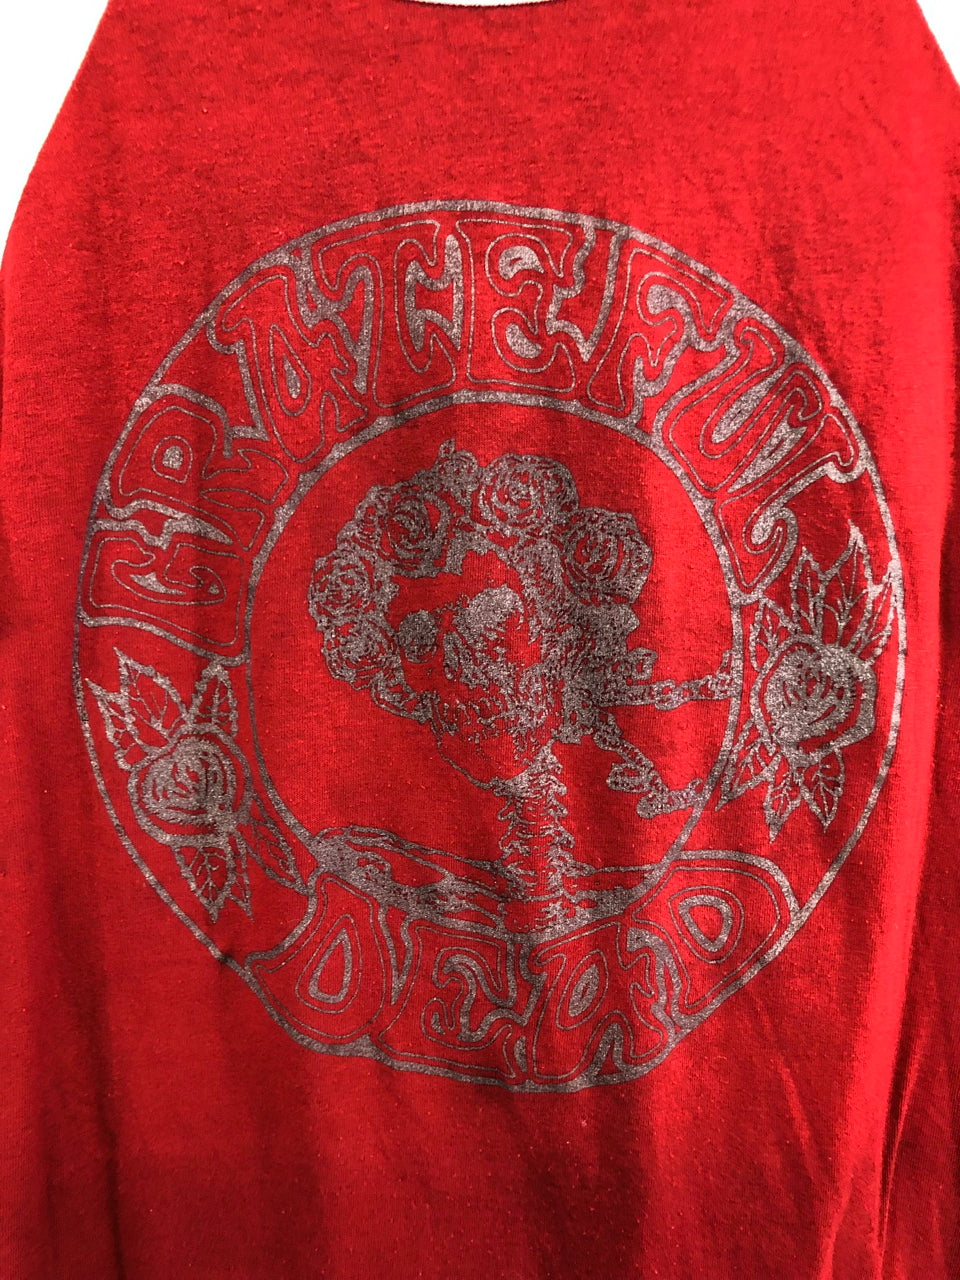 Grateful Dead Spartan Stadium 1979 T-Shirt